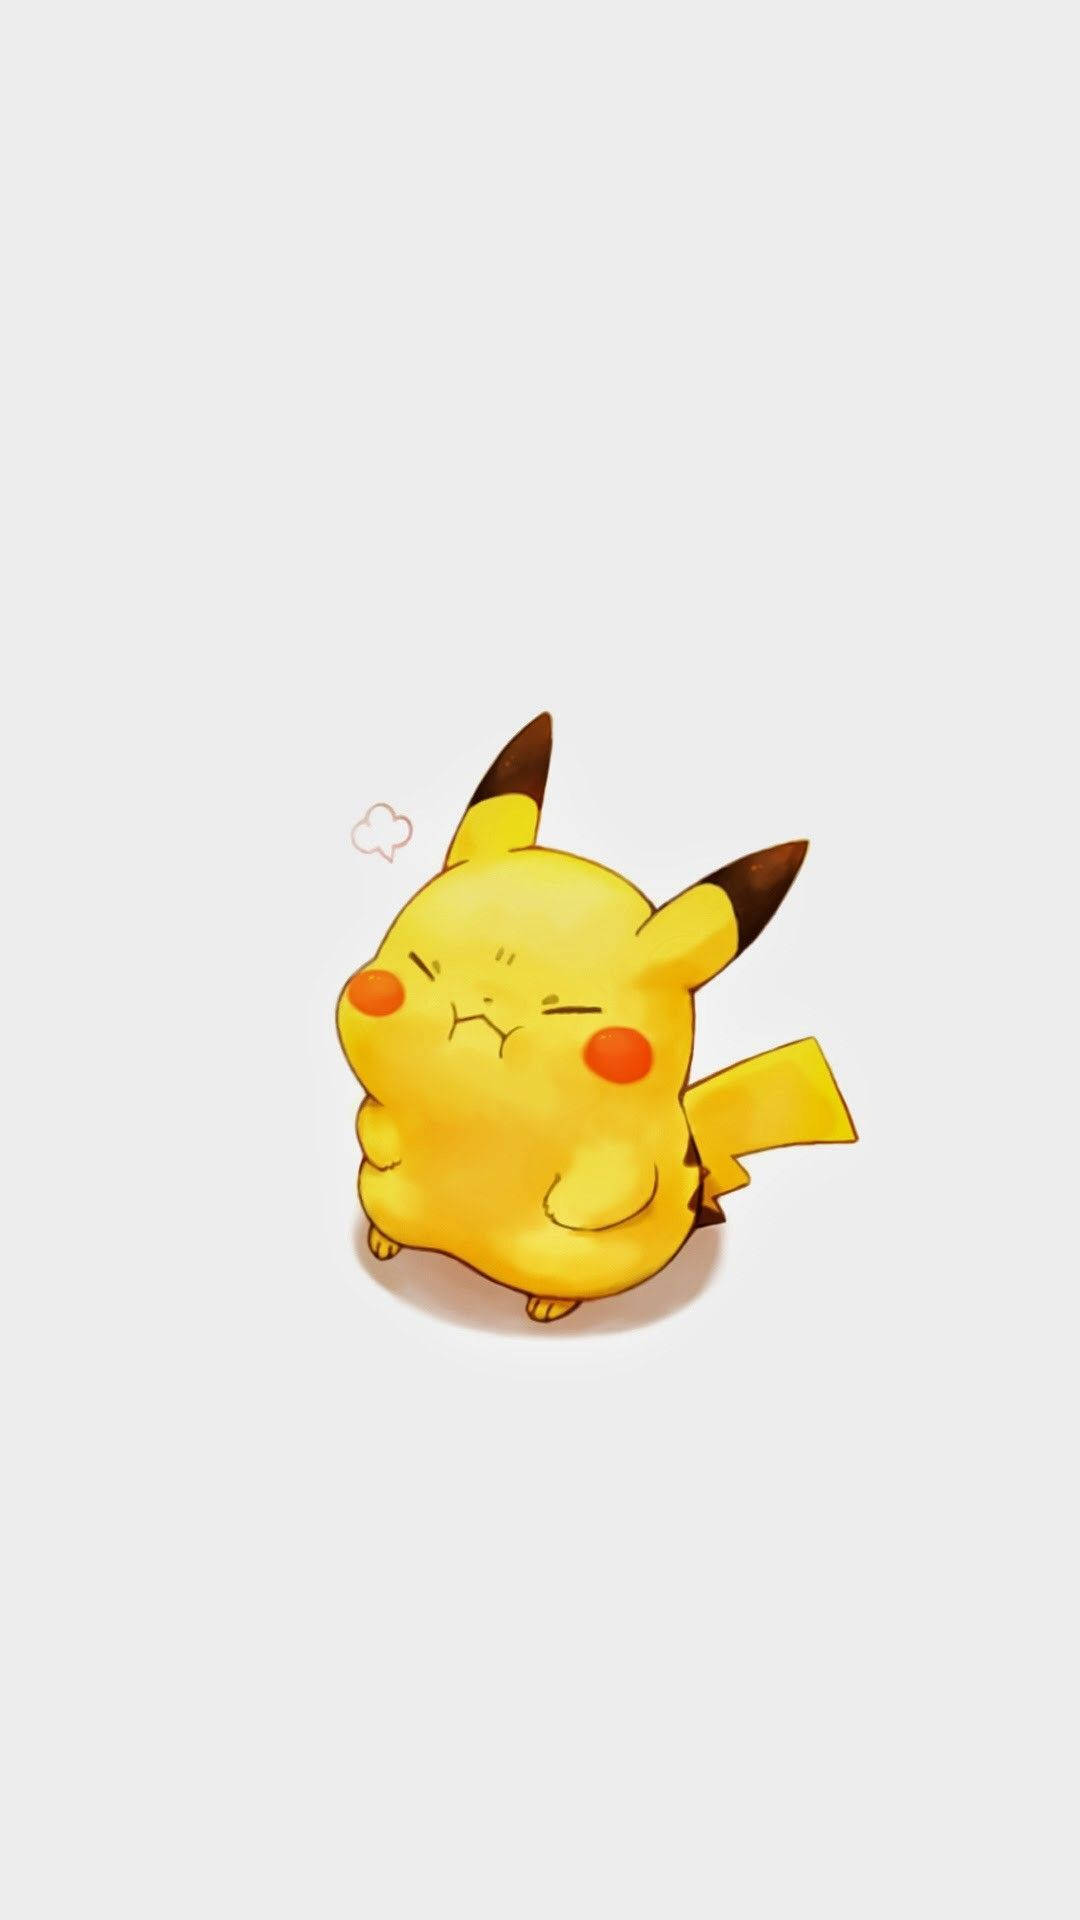 Pikachu Grumpy Face Background